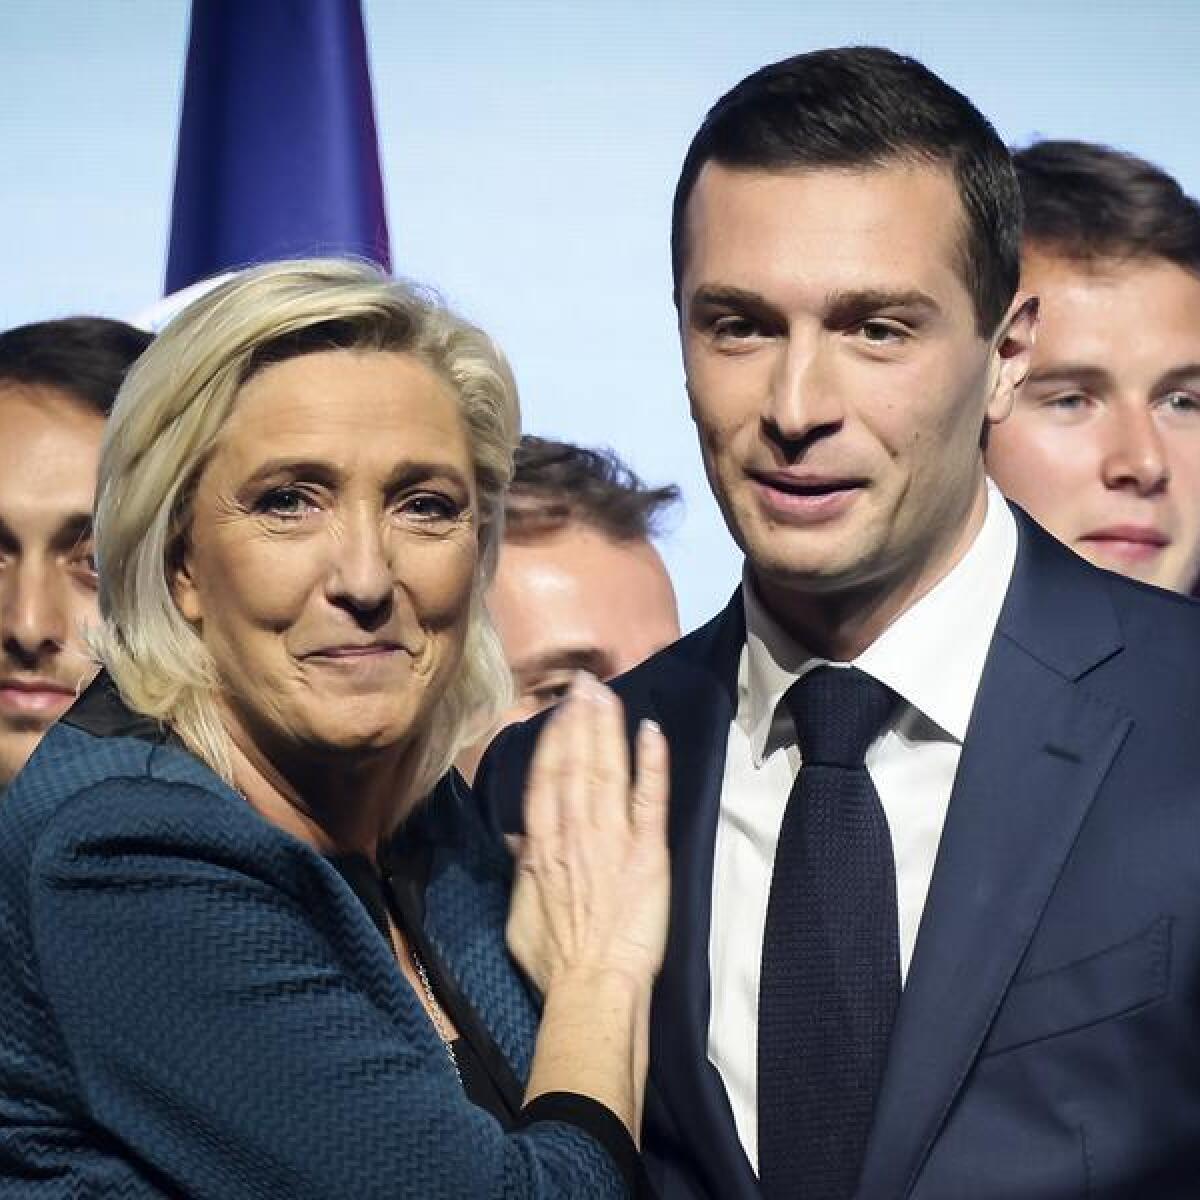 Marine Le Pen and her protege Jordan Bardella